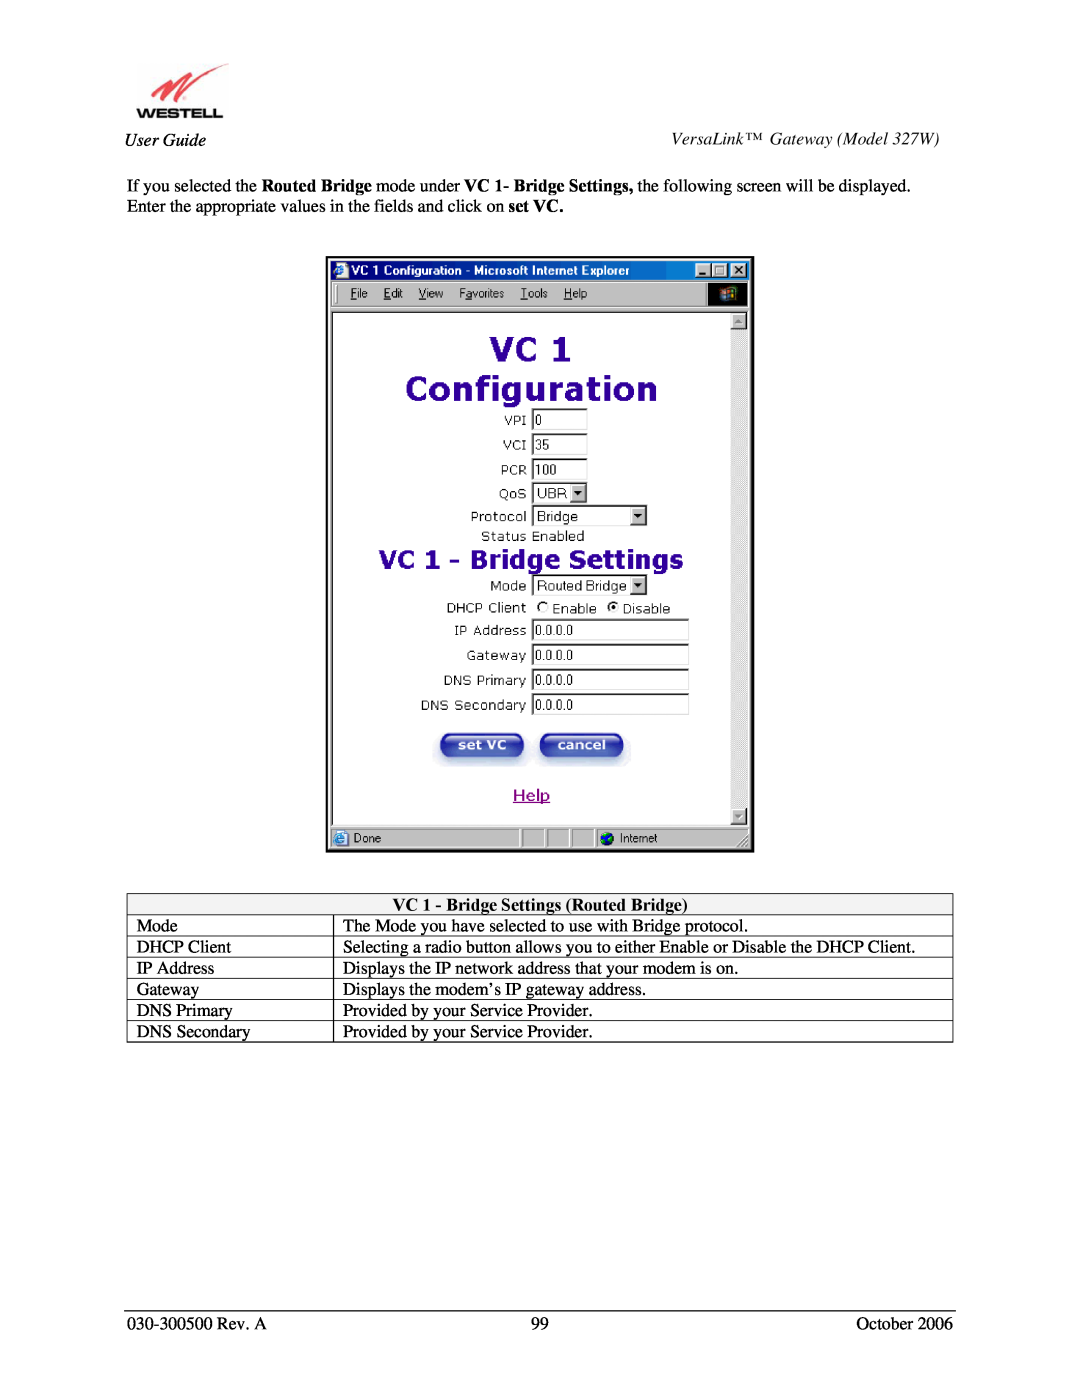 Westell Technologies 327W manual VC 1 - Bridge Settings Routed Bridge 